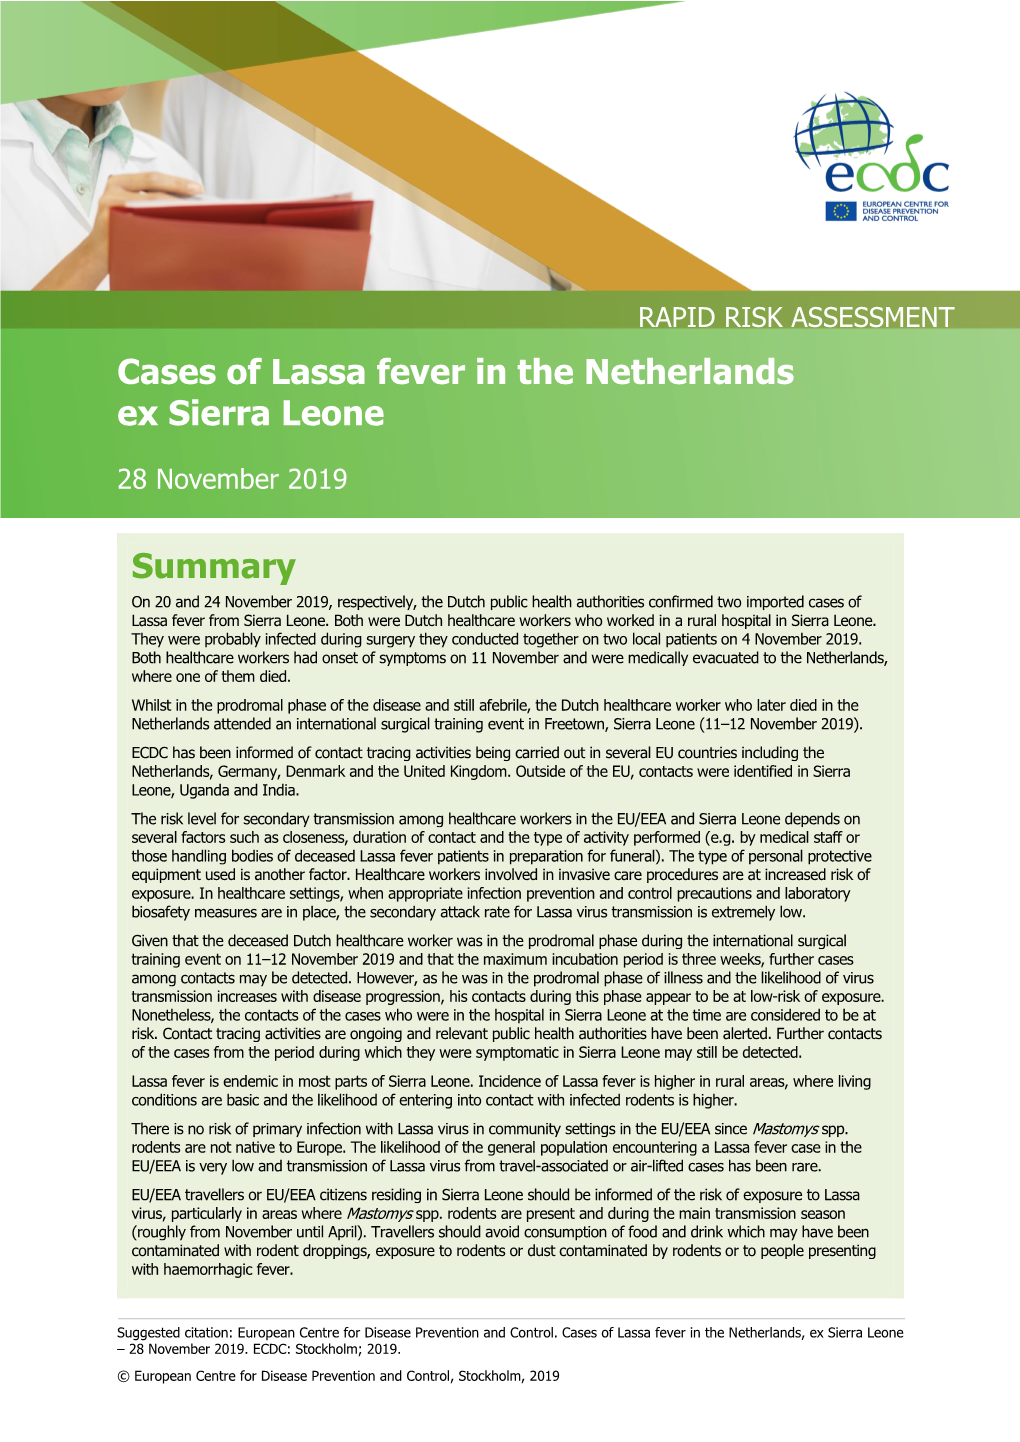 Cases of Lassa Fever in the Netherlands Ex Sierra Leone